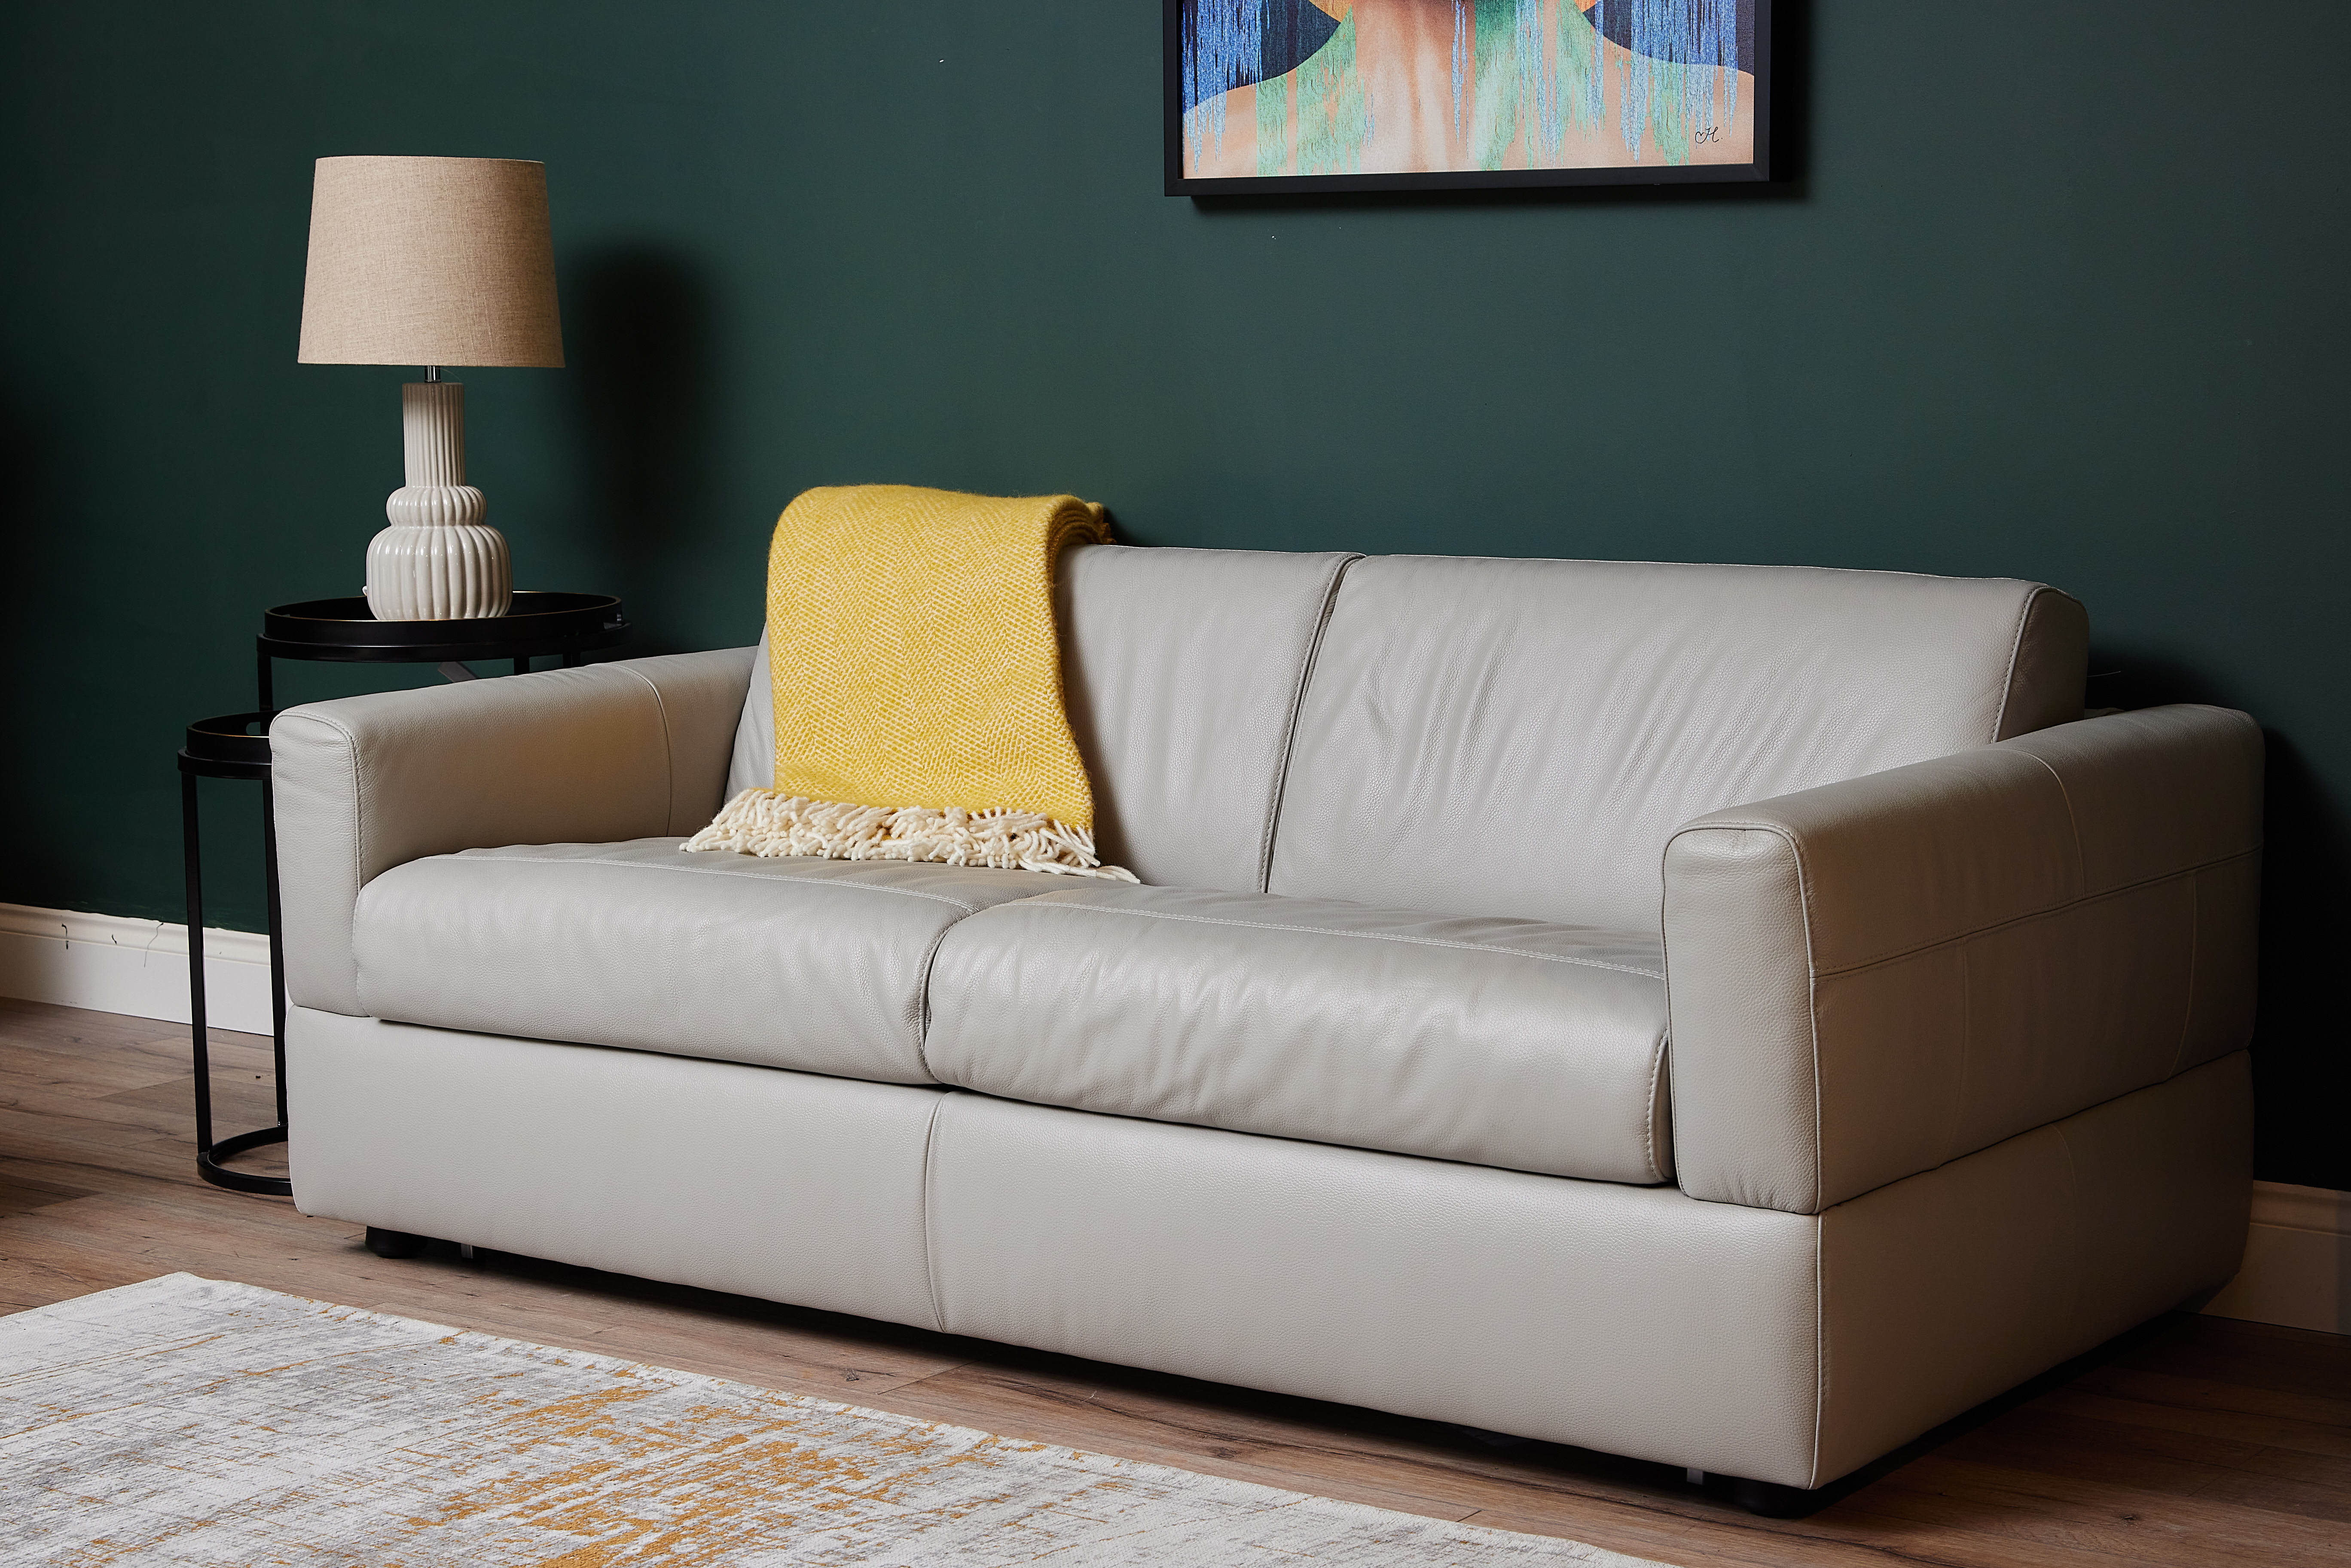 Visconti Leather Sofa Bed - Warm Grey